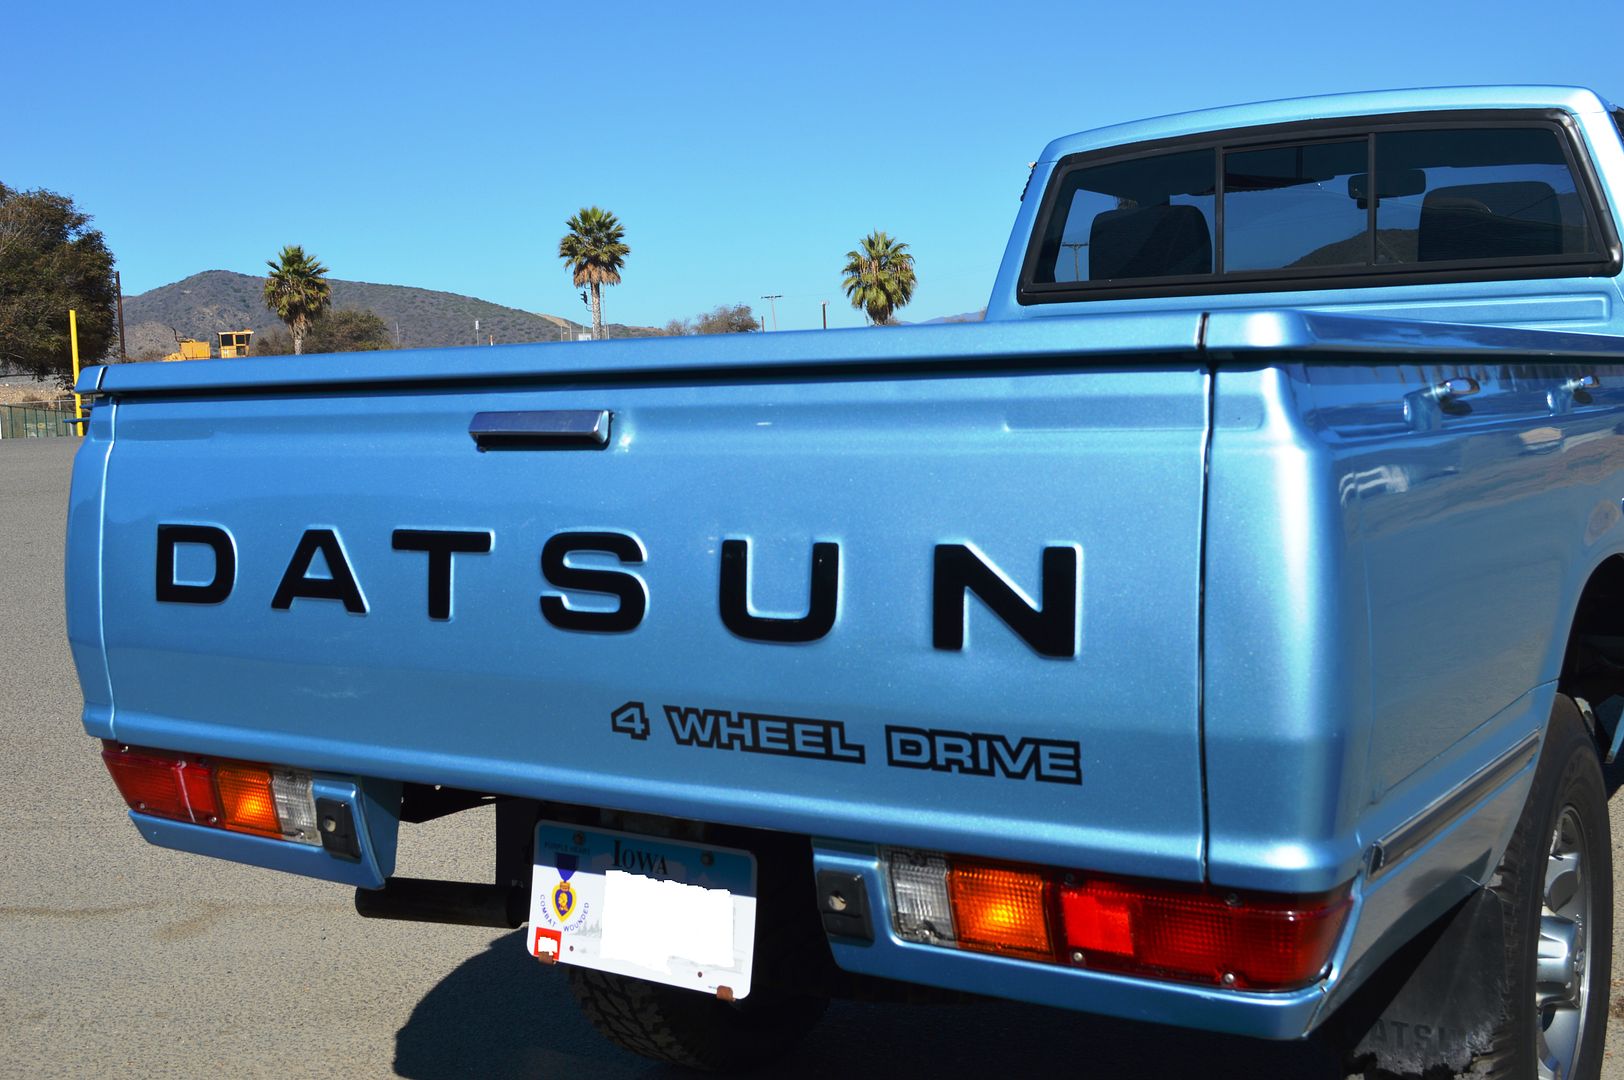 Datsun34_zpsad7c9944.jpg